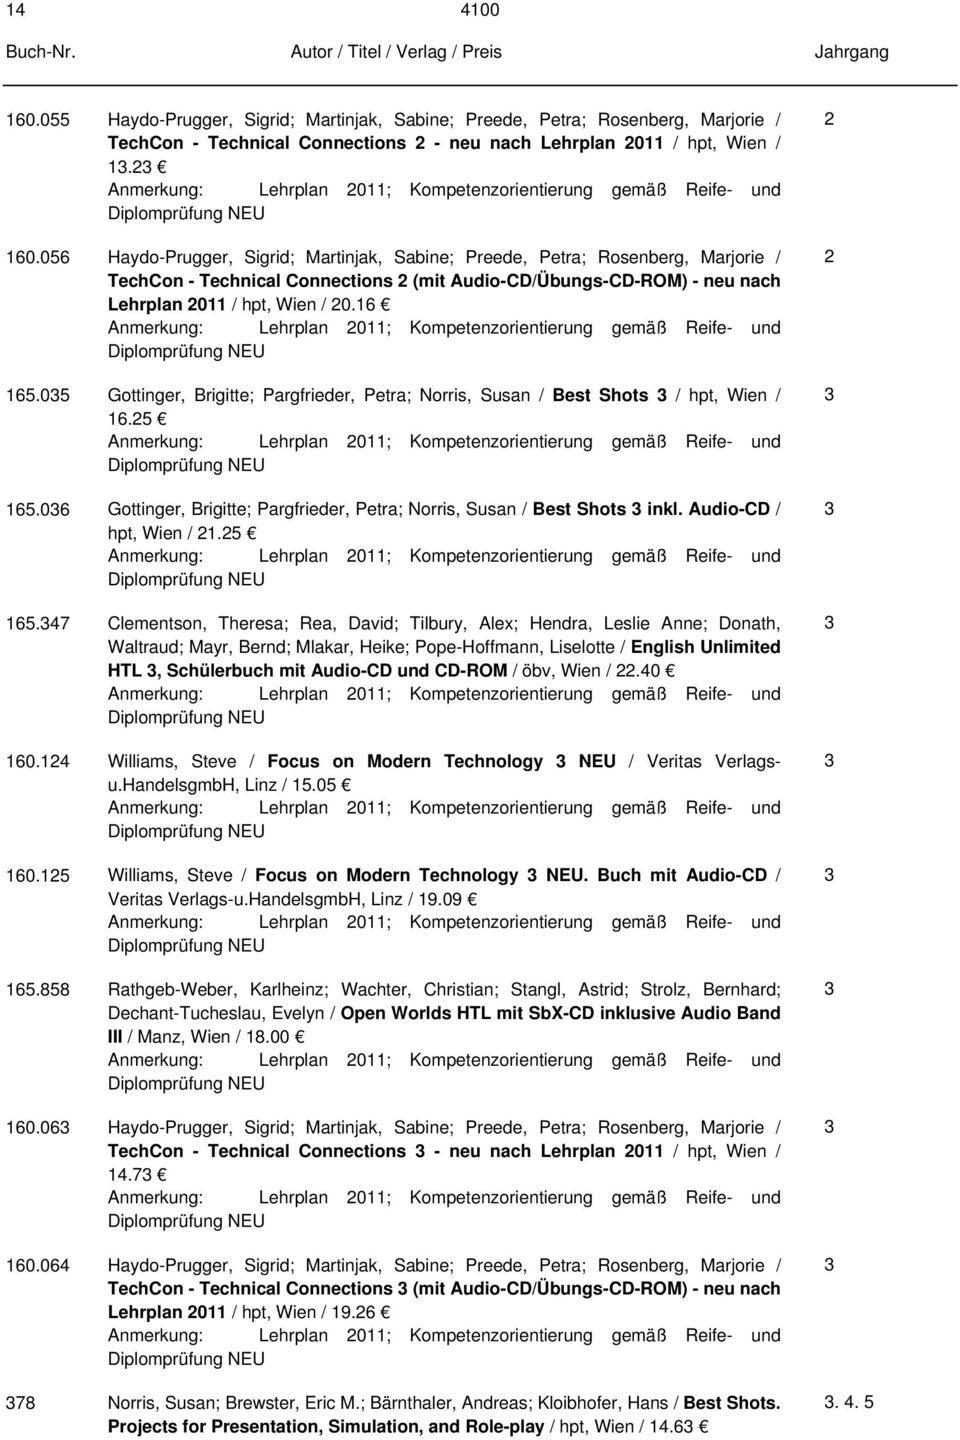 056 Haydo-Prugger, Sigrid; Martinjak, Sabine; Preede, Petra; Rosenberg, Marjorie / TechCon - Technical Connections (mit Audio-CD/Übungs-CD-ROM) - neu nach Lehrplan 0 / hpt, Wien / 0.